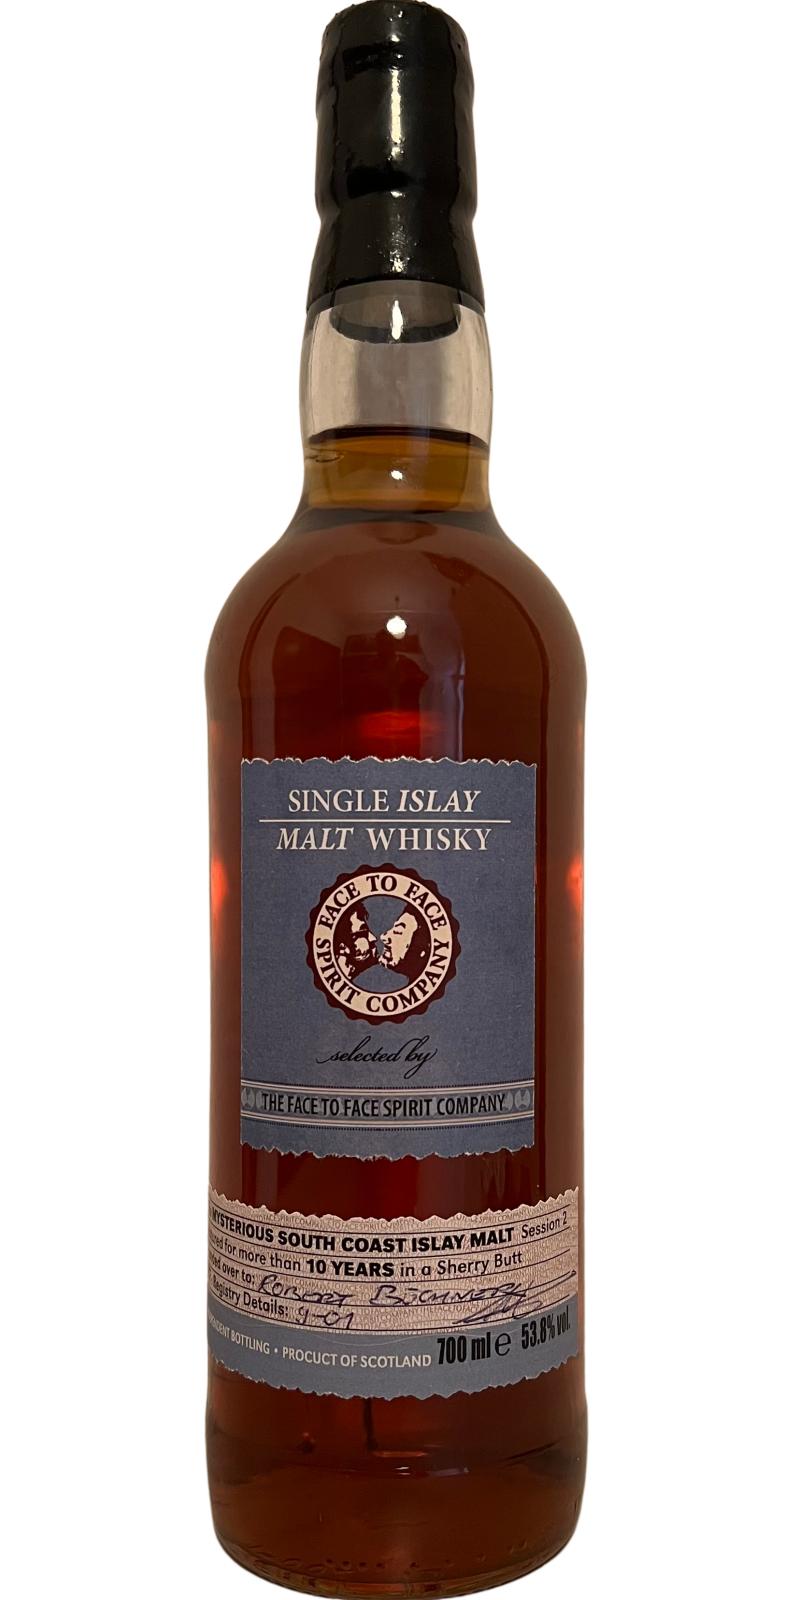 Single Malt Scotch Whisky The Mysterious South Coast Islay Malt FtF Sherry Butt 53.8% 700ml